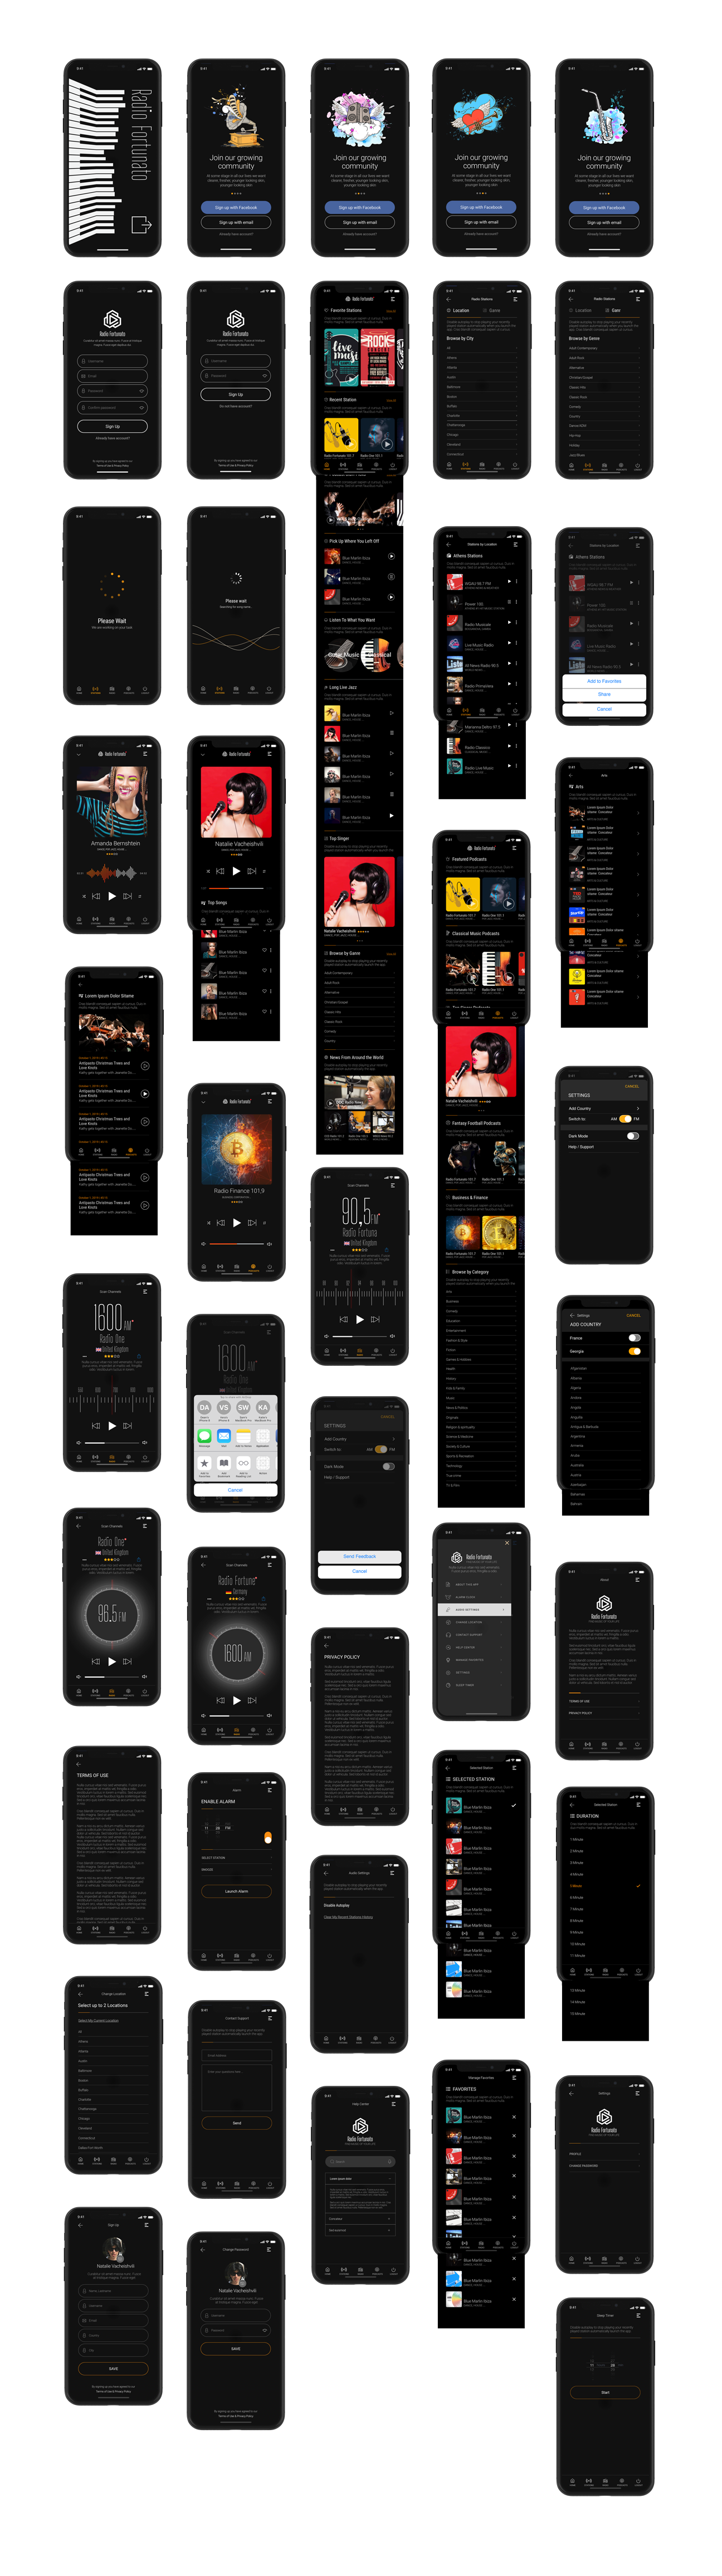 Fortunato - Radio UI Kit for Mobile App - 3